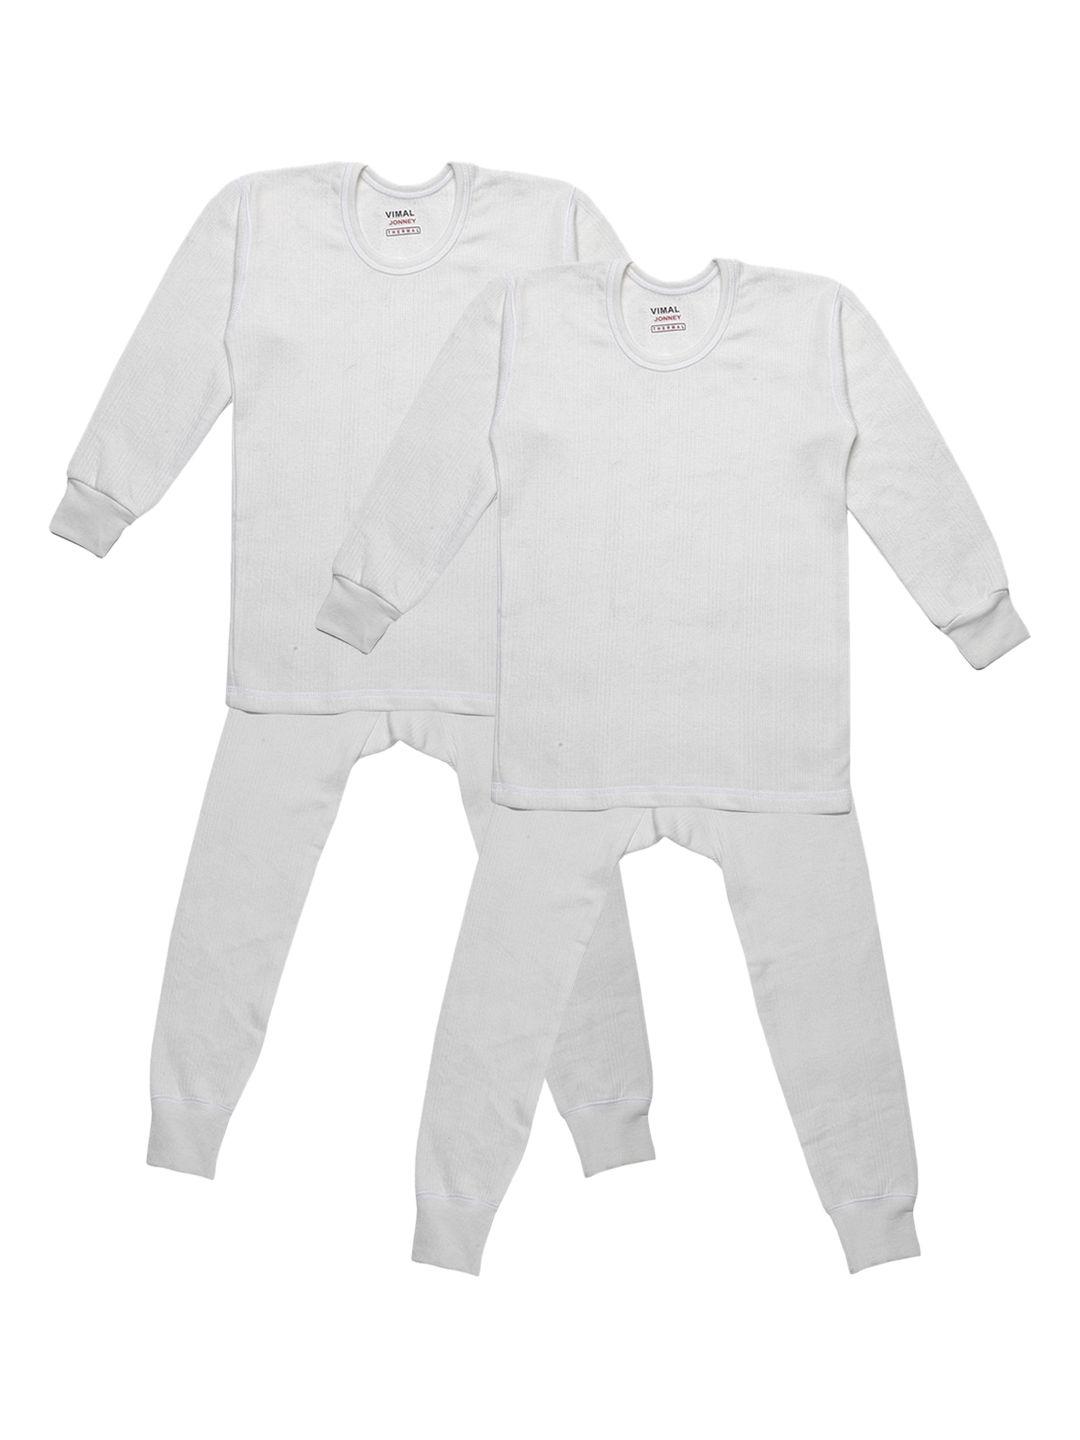 vimal jonney kids pack of 2 white stripe patterned thermal top and bottom set